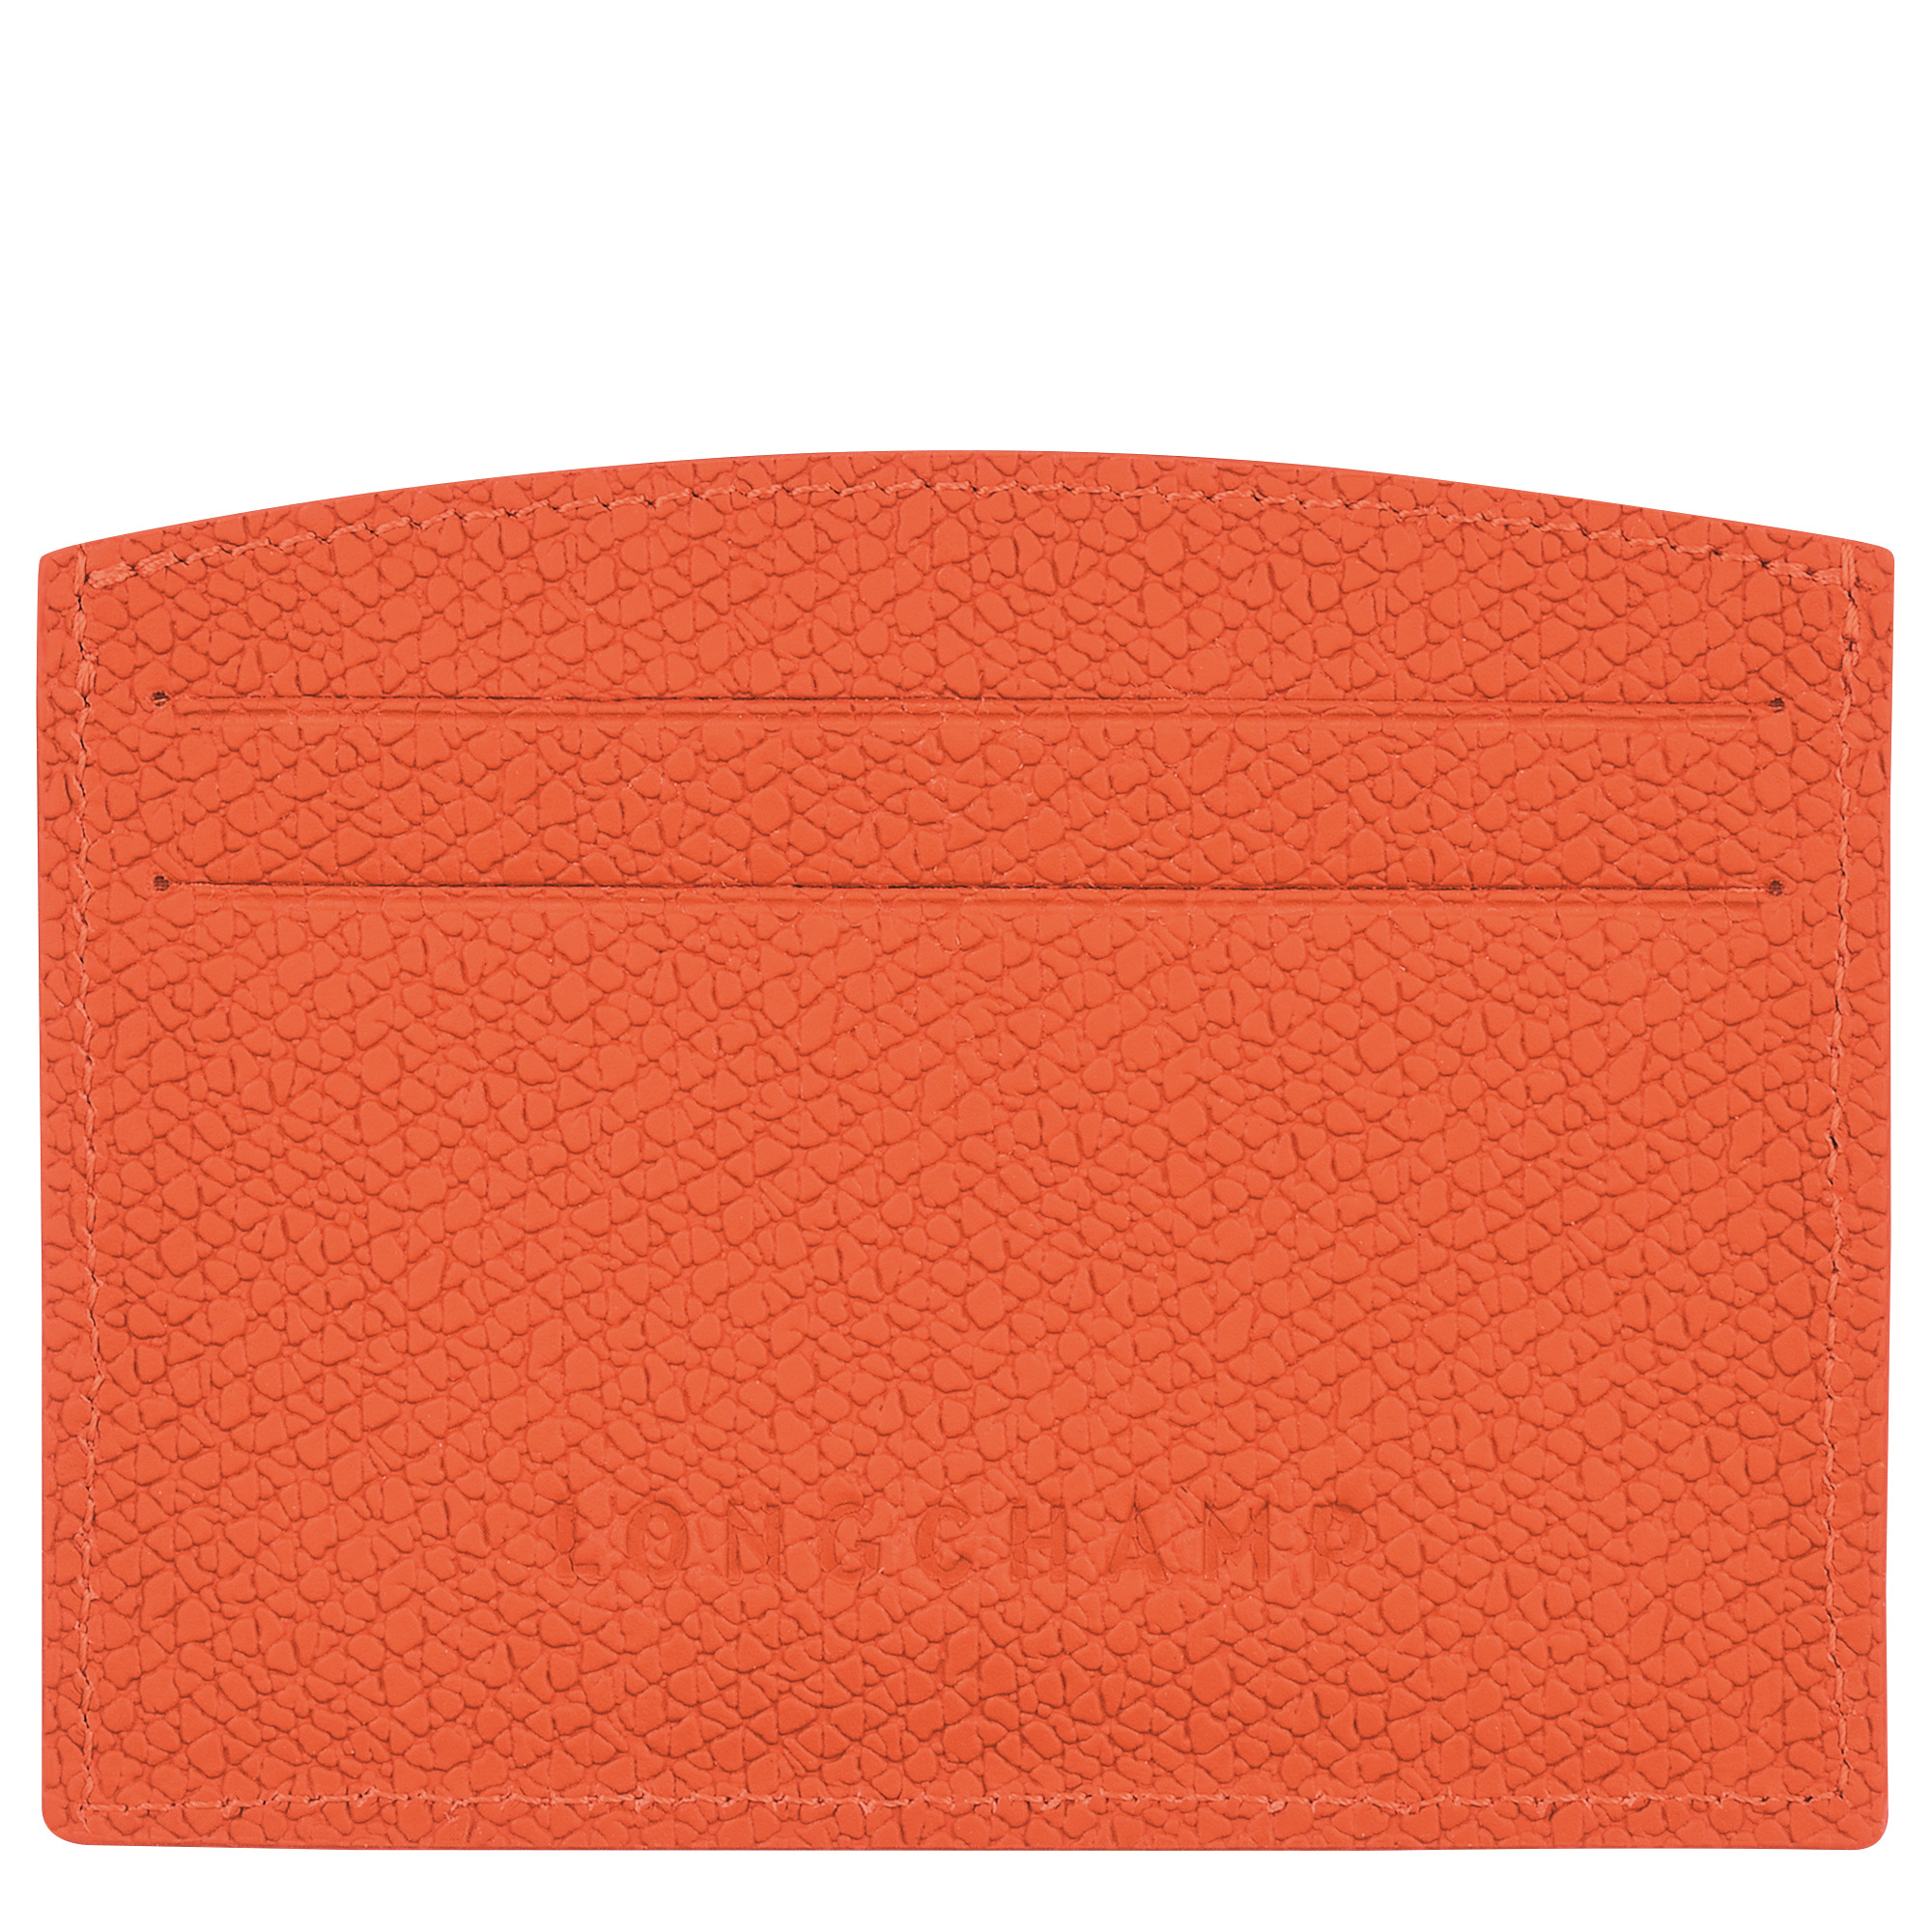 Roseau Card holder Orange - Leather - 2